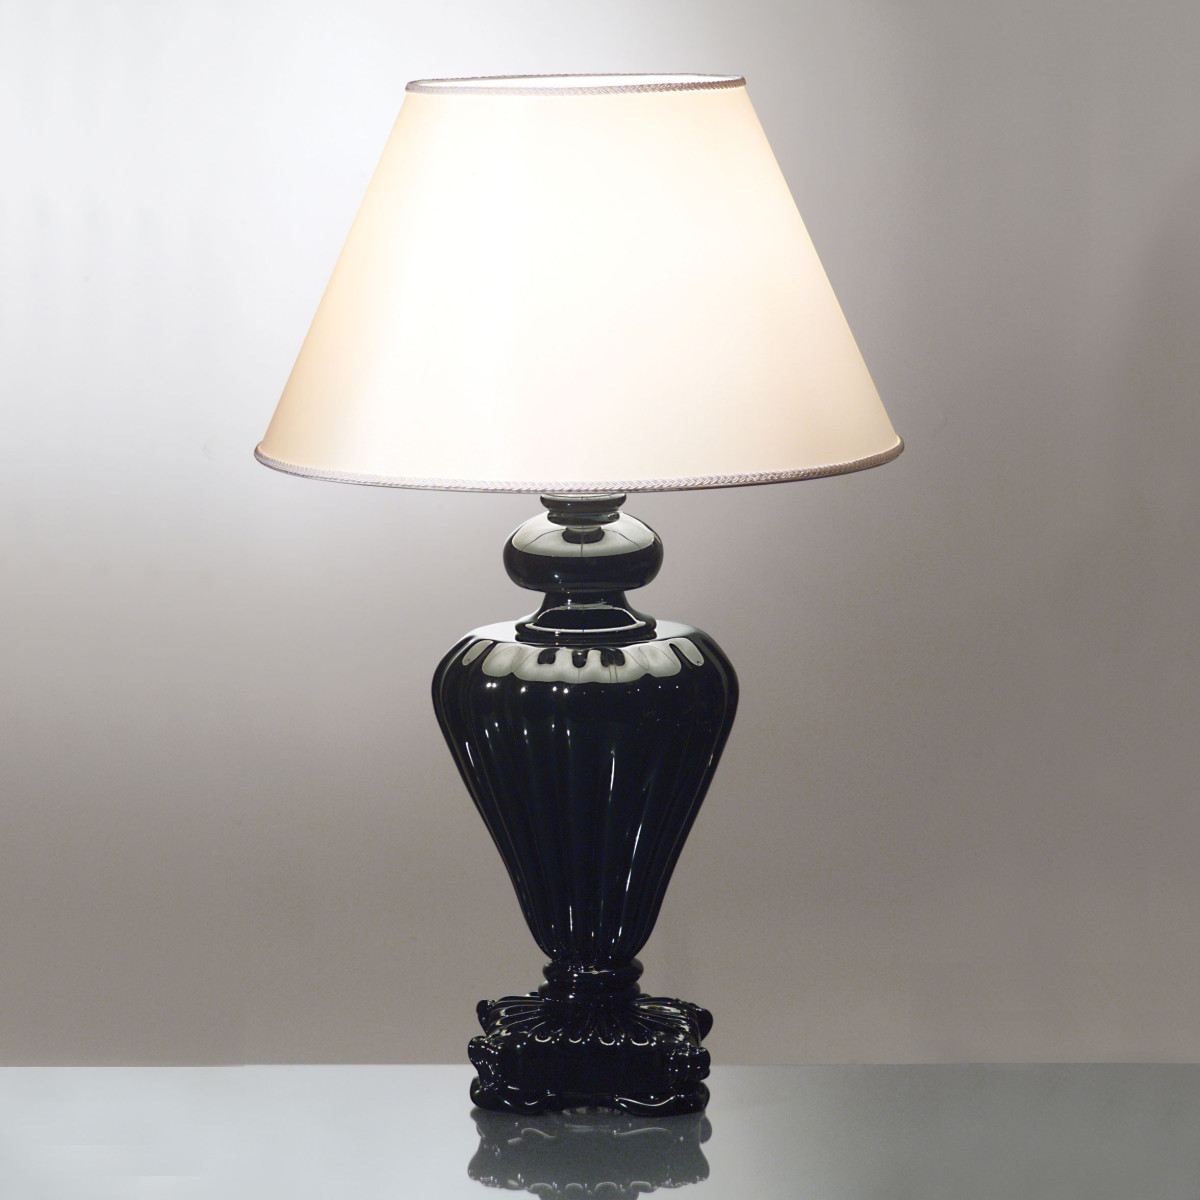 "Teti" Murano glass table lamp